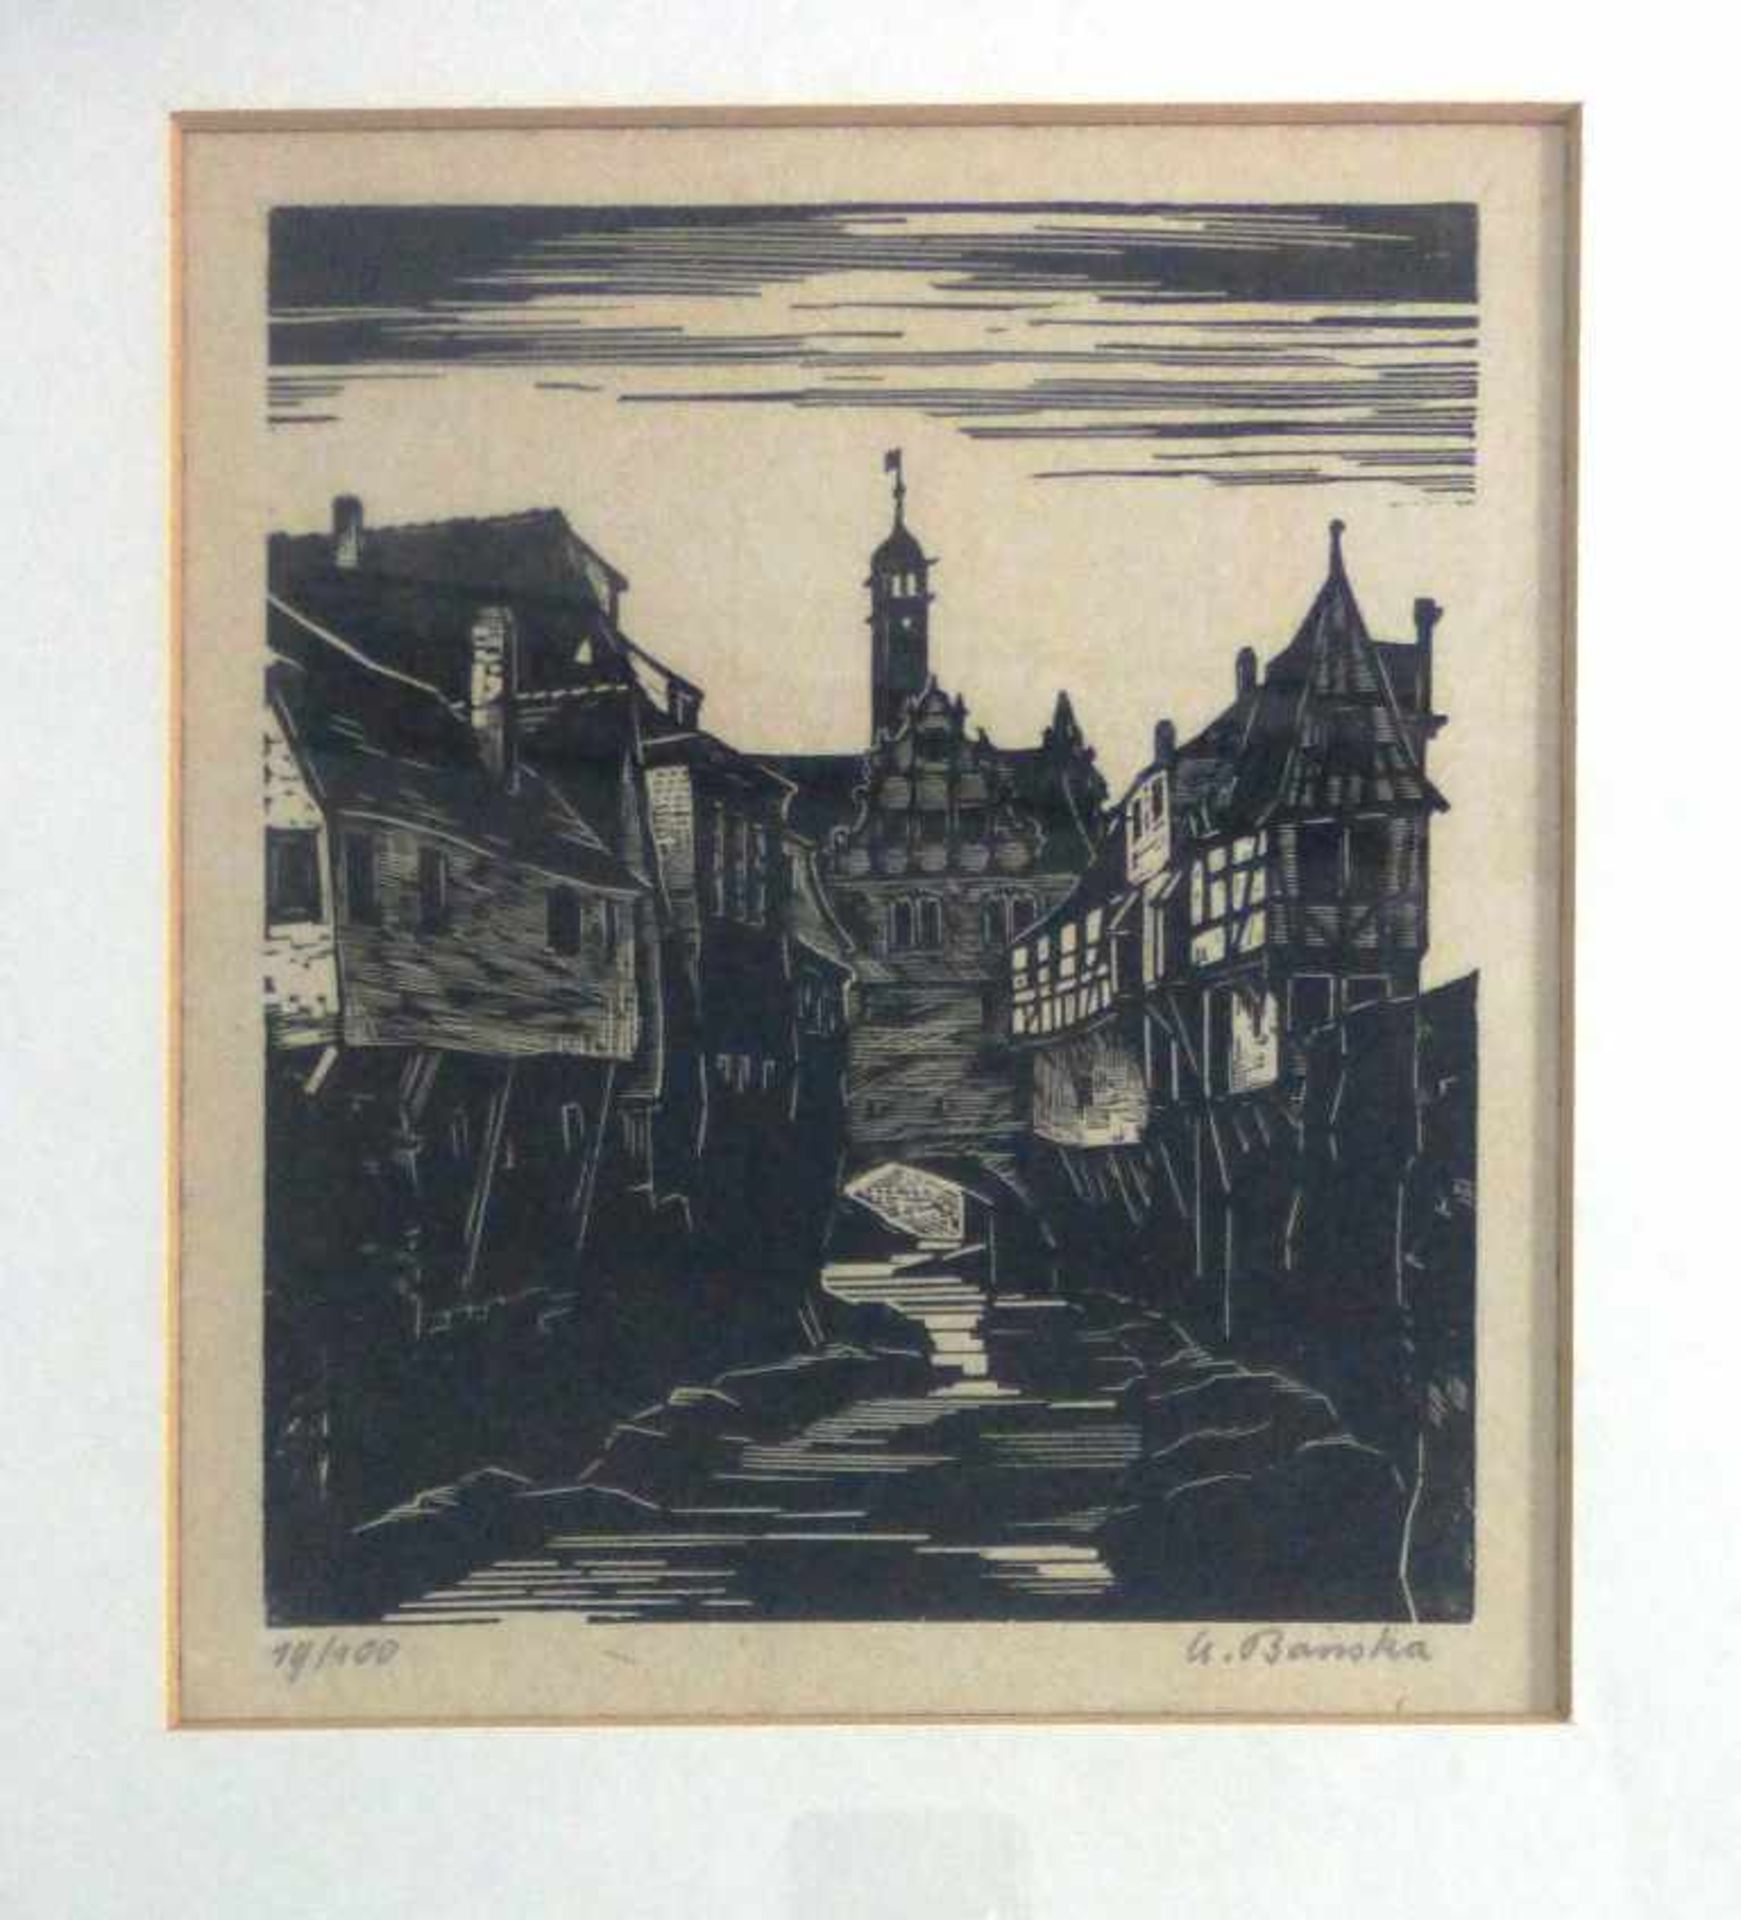 Banska, Albert (1889 Fischbach - 1957 Lindelbach), Holzschnitt "Marktbreit", num. 19/100,sign., u.PP